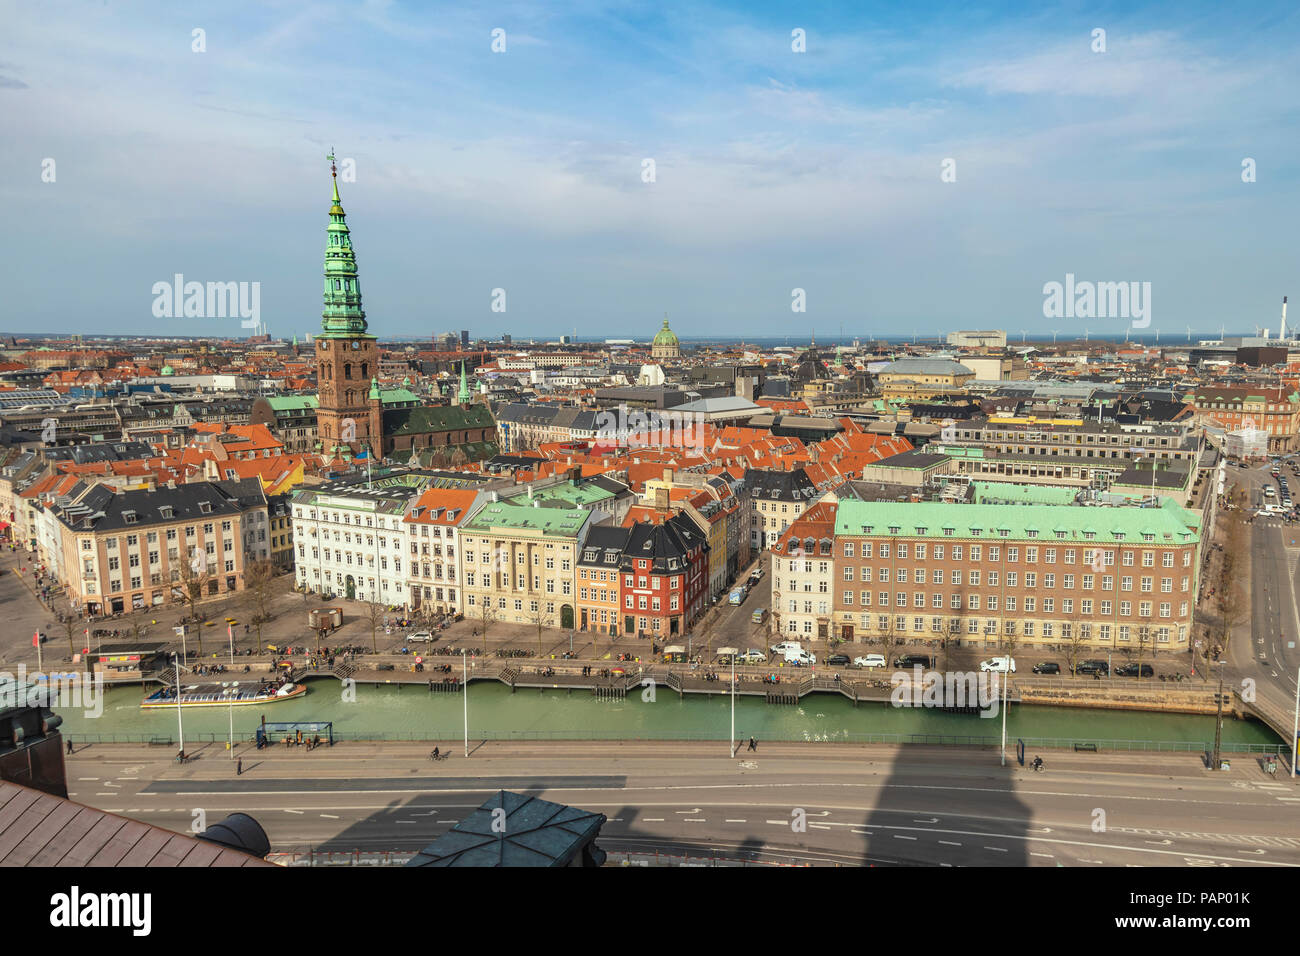 Vista aérea de Copenhague la ciudad de Copenhague, Dinamarca Foto de stock